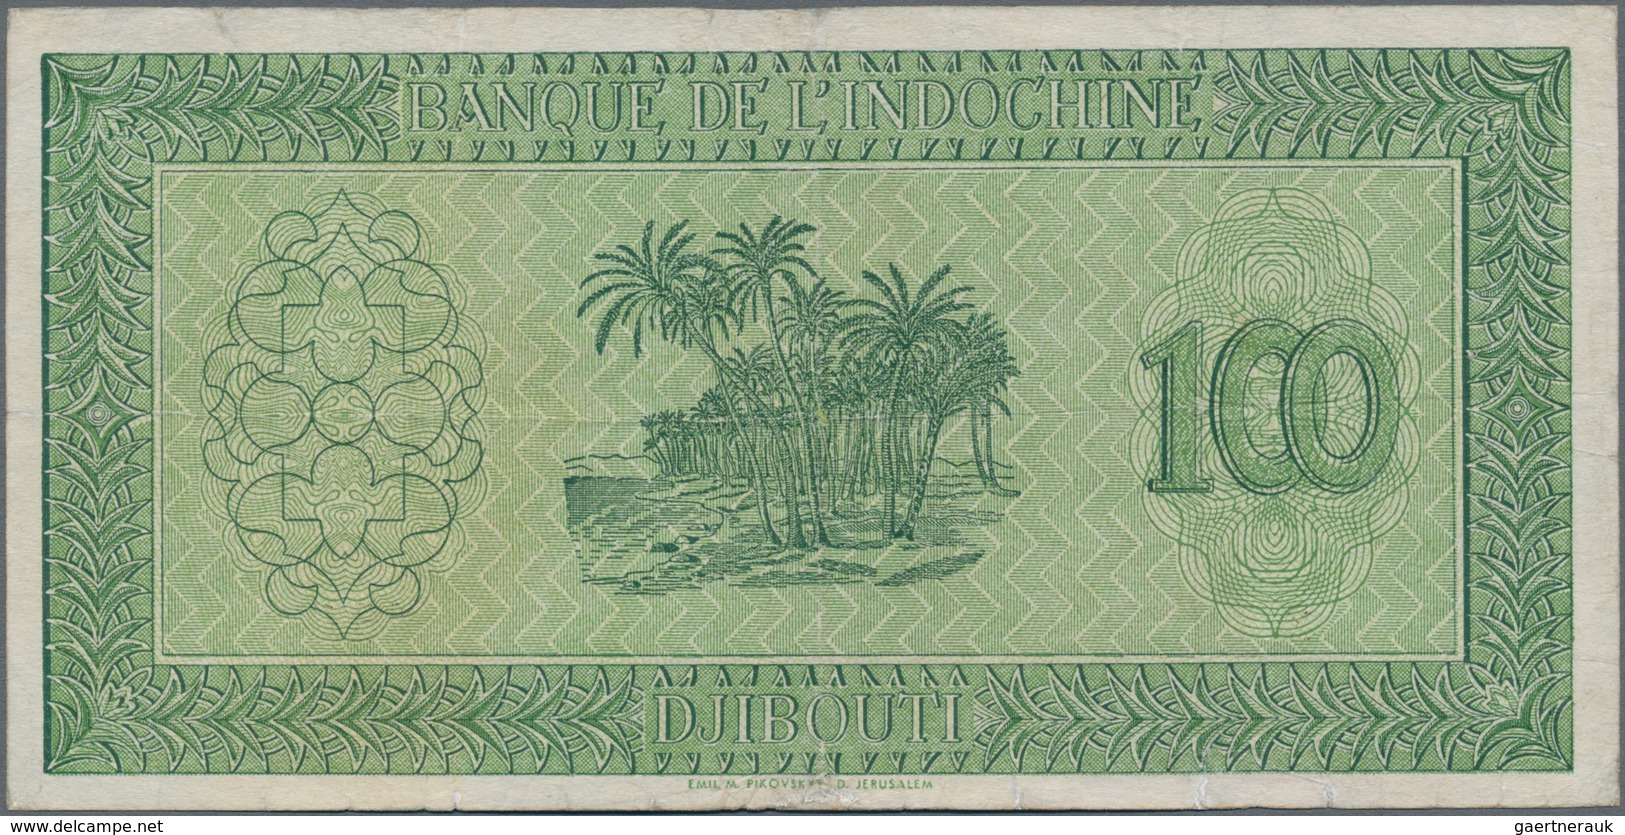 Djibouti / Dschibuti: Banque De L'Indochine 100 Francs ND(1945), P.16, Several Folds, Tiny Pinholes - Djibouti